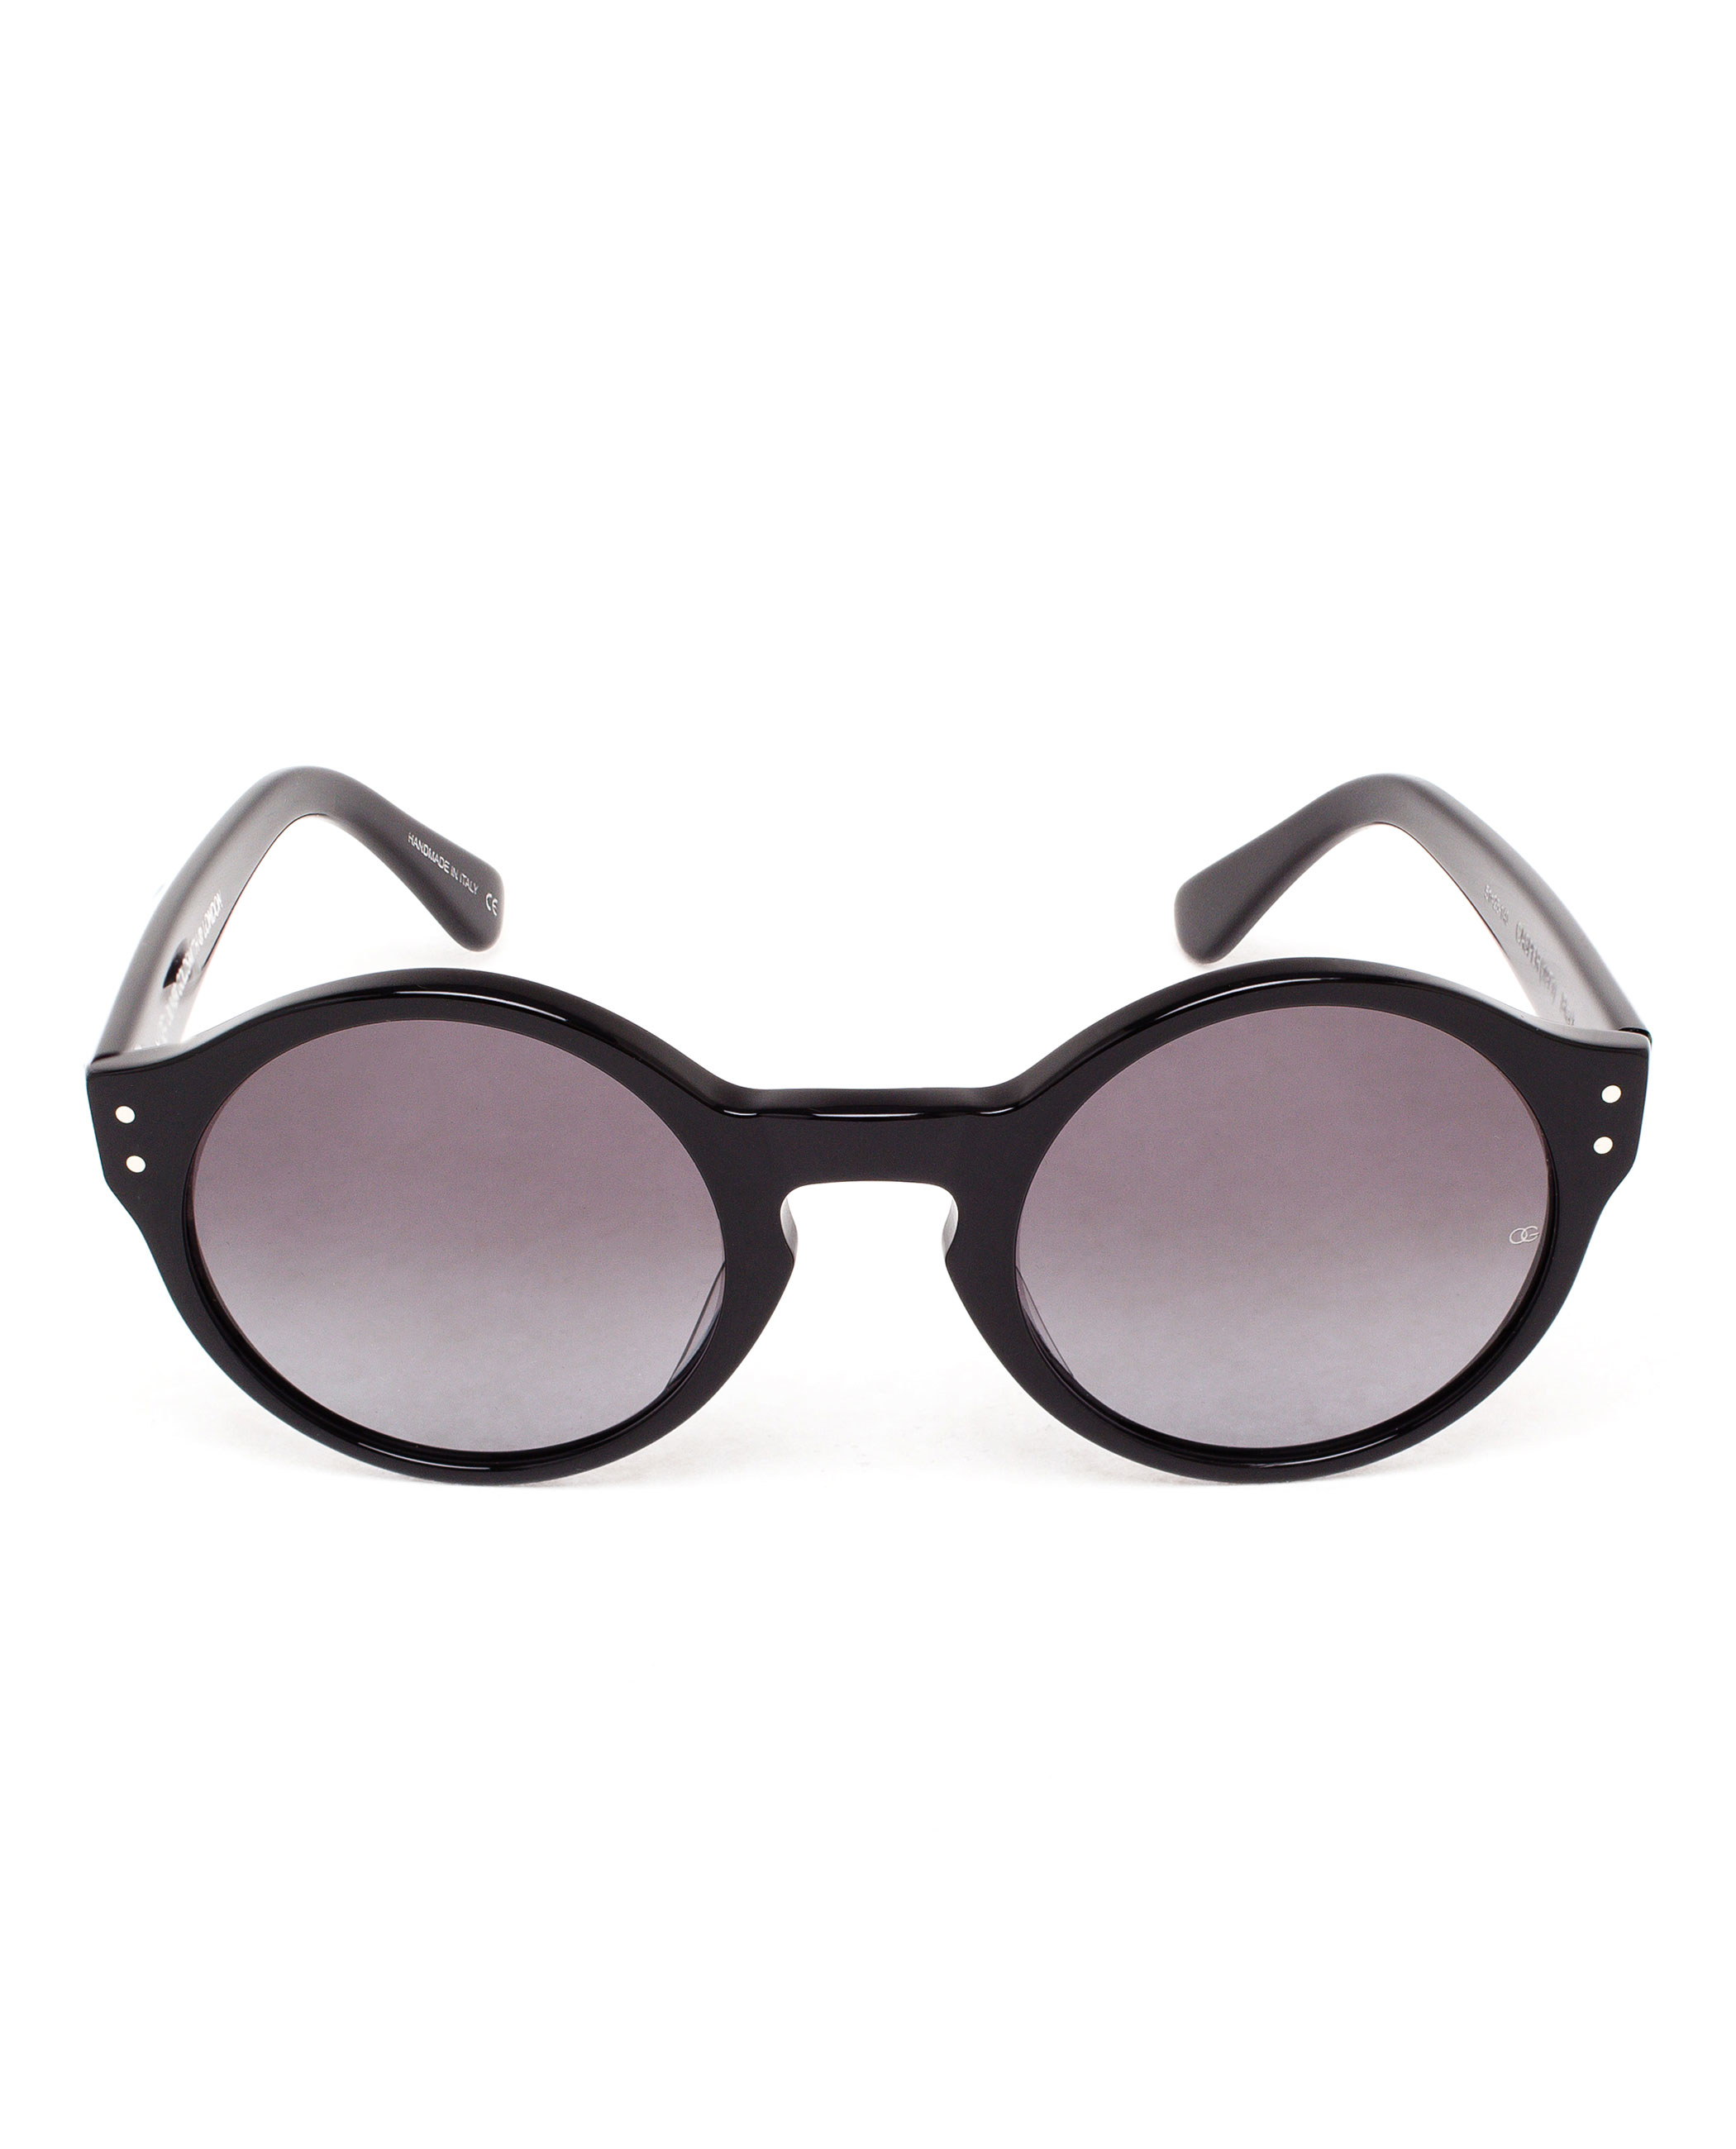 Lyst - Oliver Goldsmith Casper Sunglasses in Black